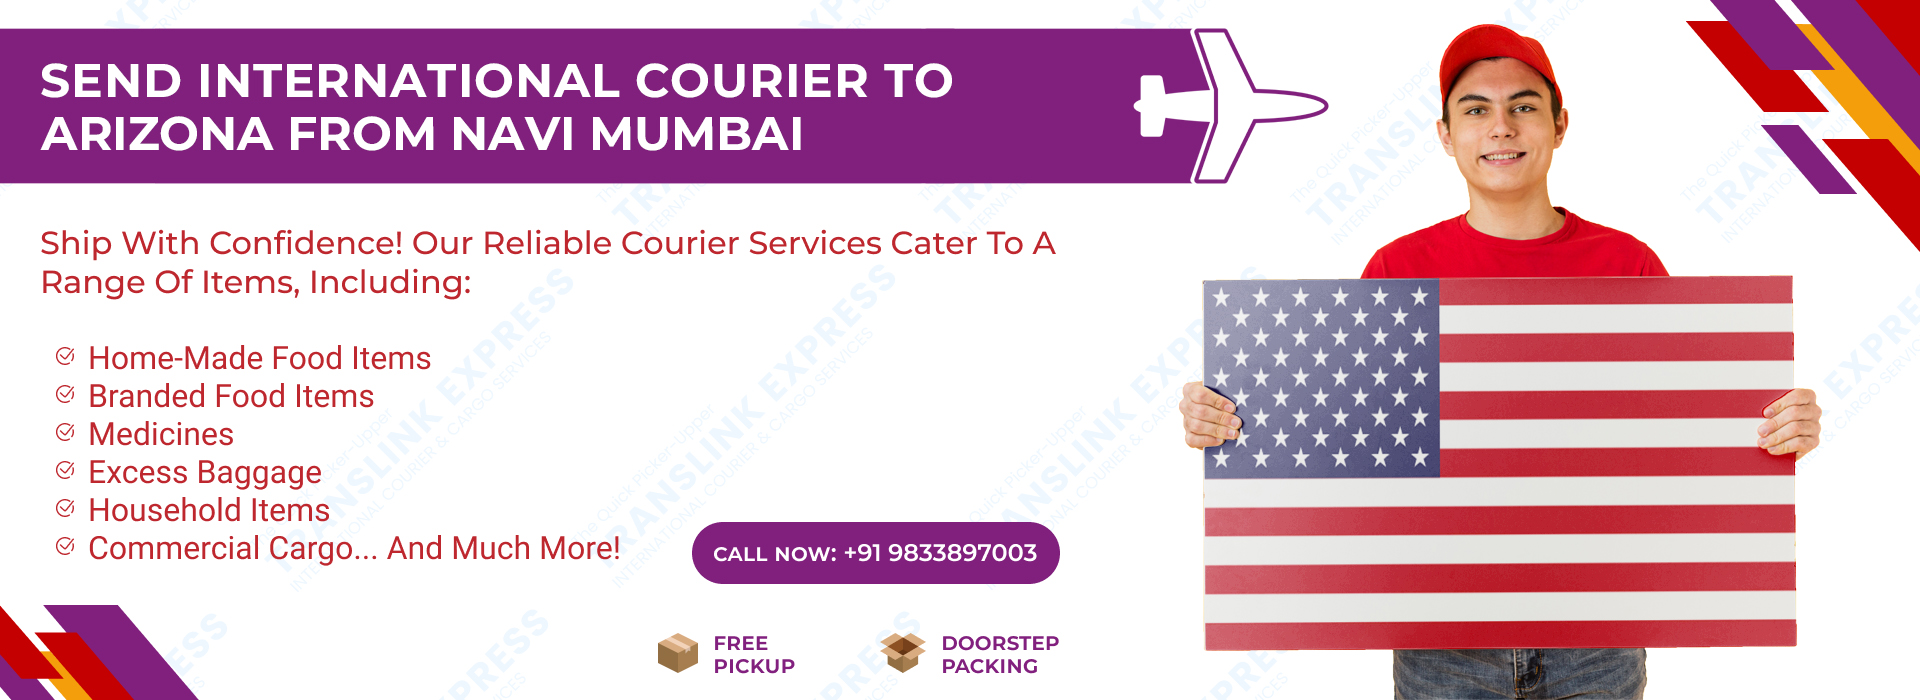 Courier to Arizona From Navi Mumbai